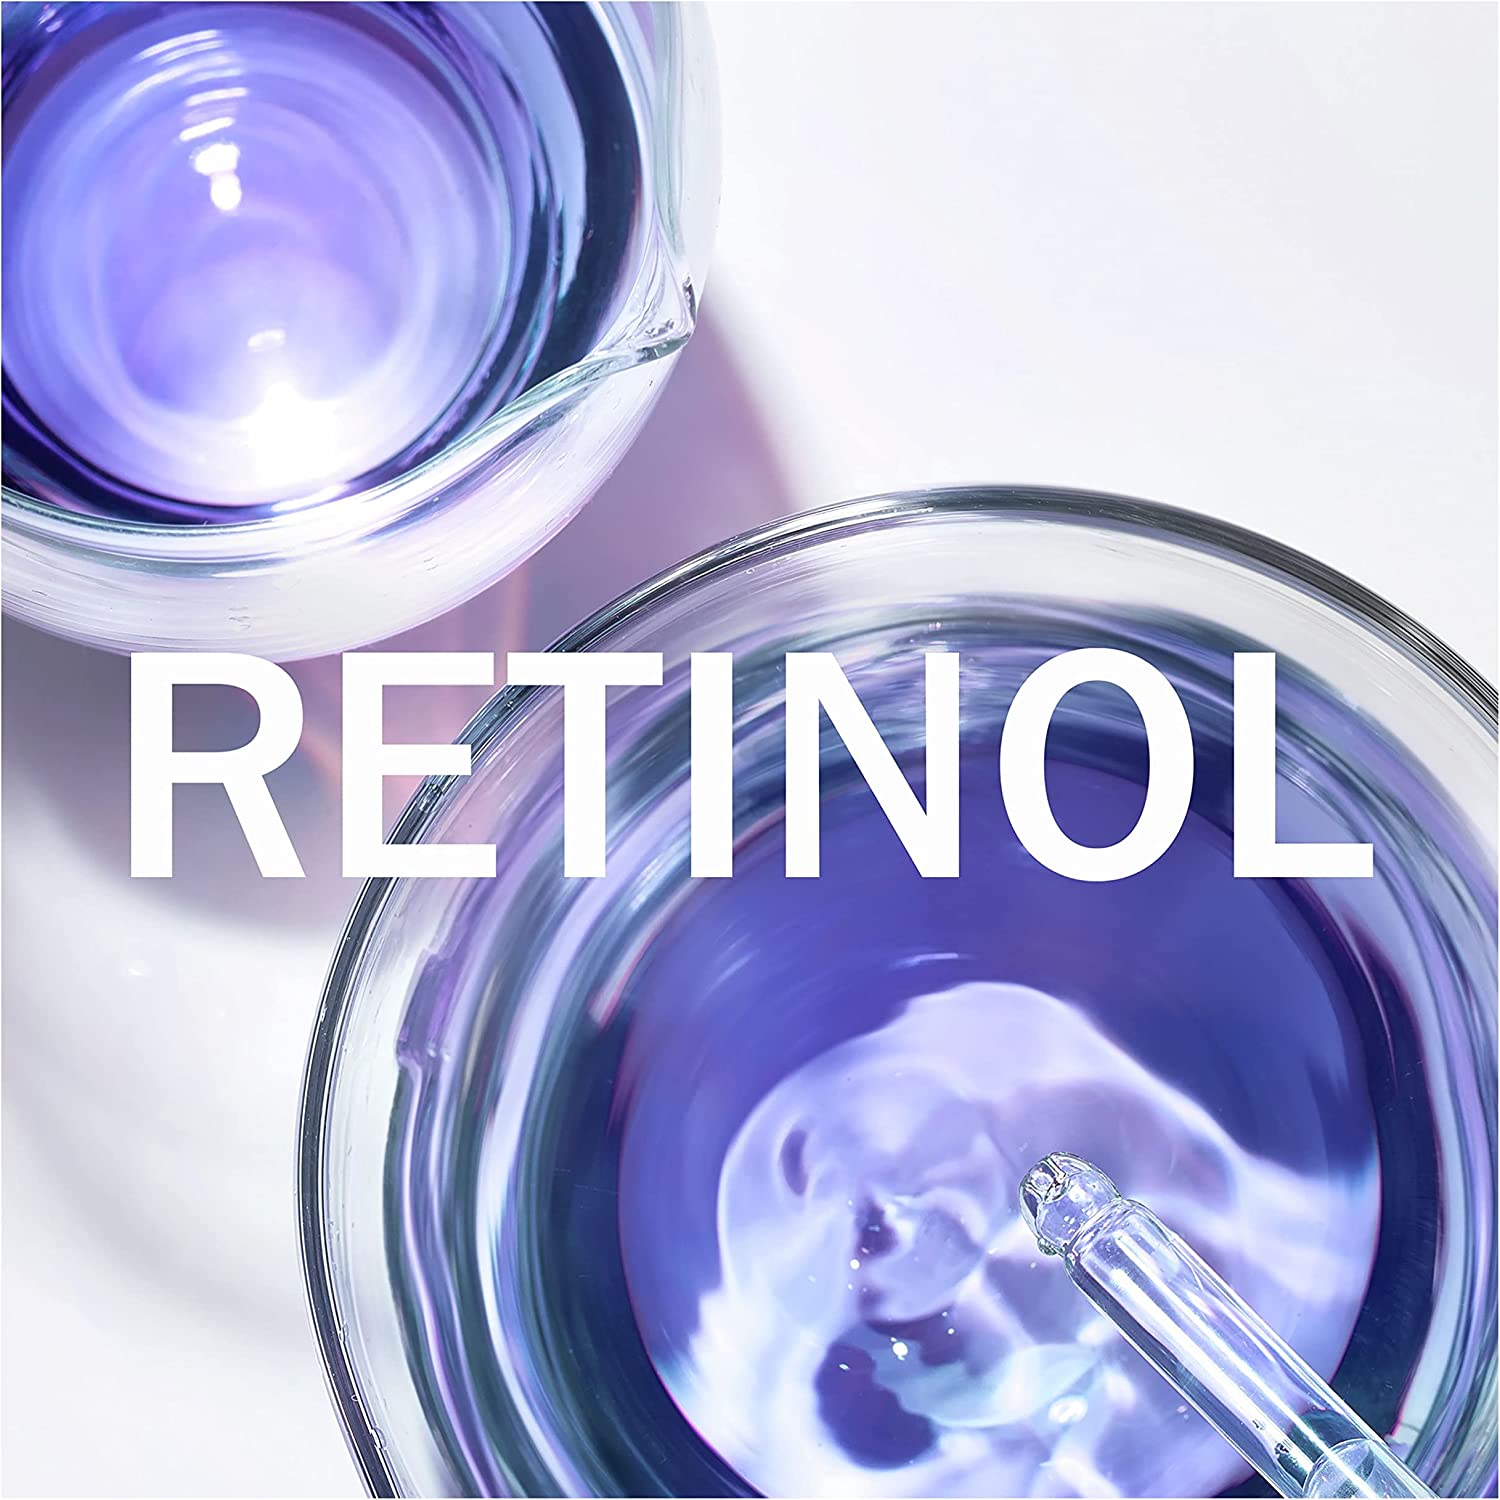 Olay Regenerist Retinol Night Cream, Unique Formula With Retinol & Vitamin B3, 50ml - Healthxpress.ie